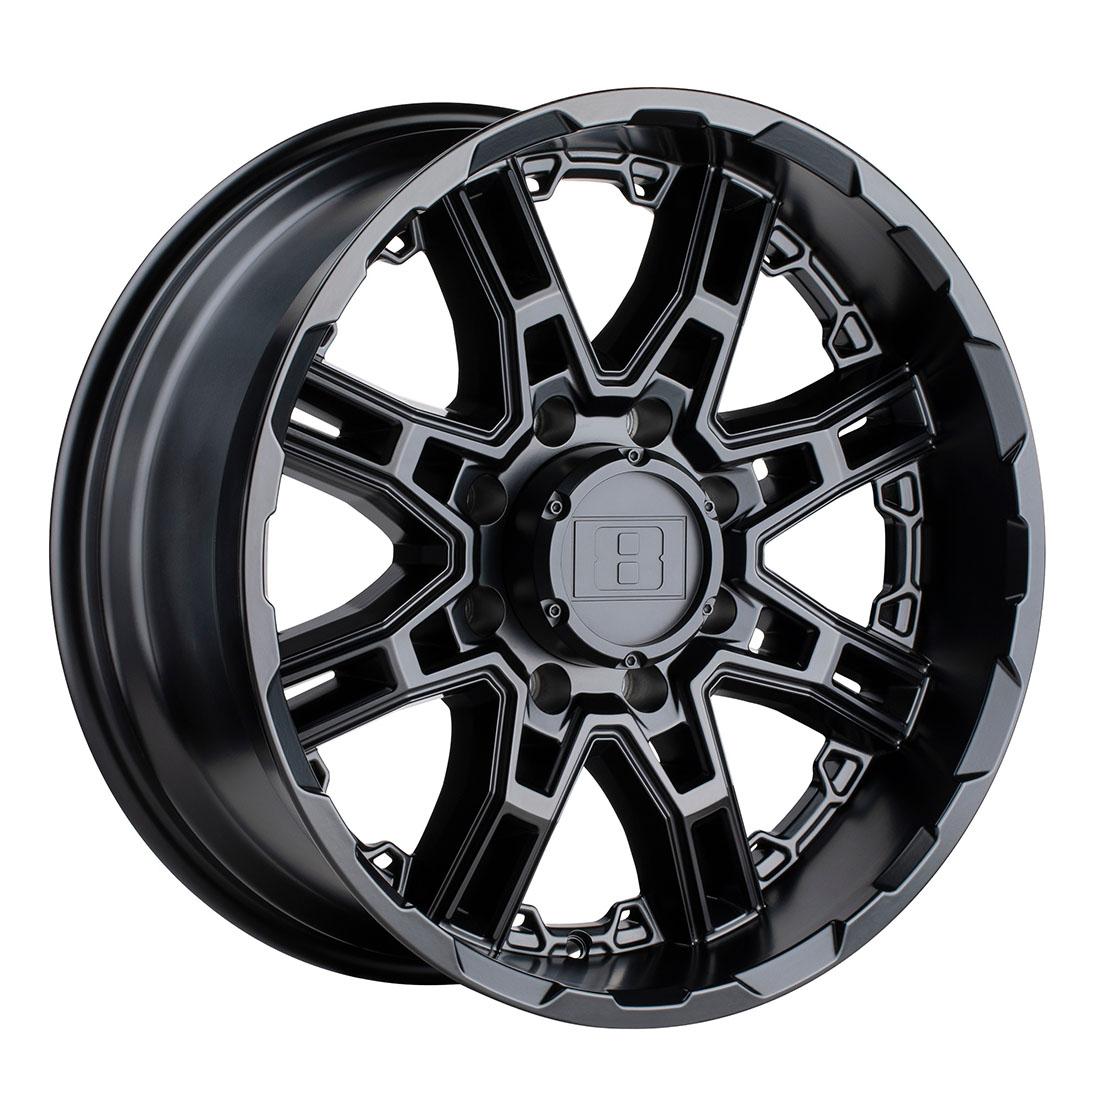 Level 8 Wheels SLINGSHOT Matte Black 16 inch + Mickey Thompson Tire - BAJA LEGEND MTZ  305/70/16  NW